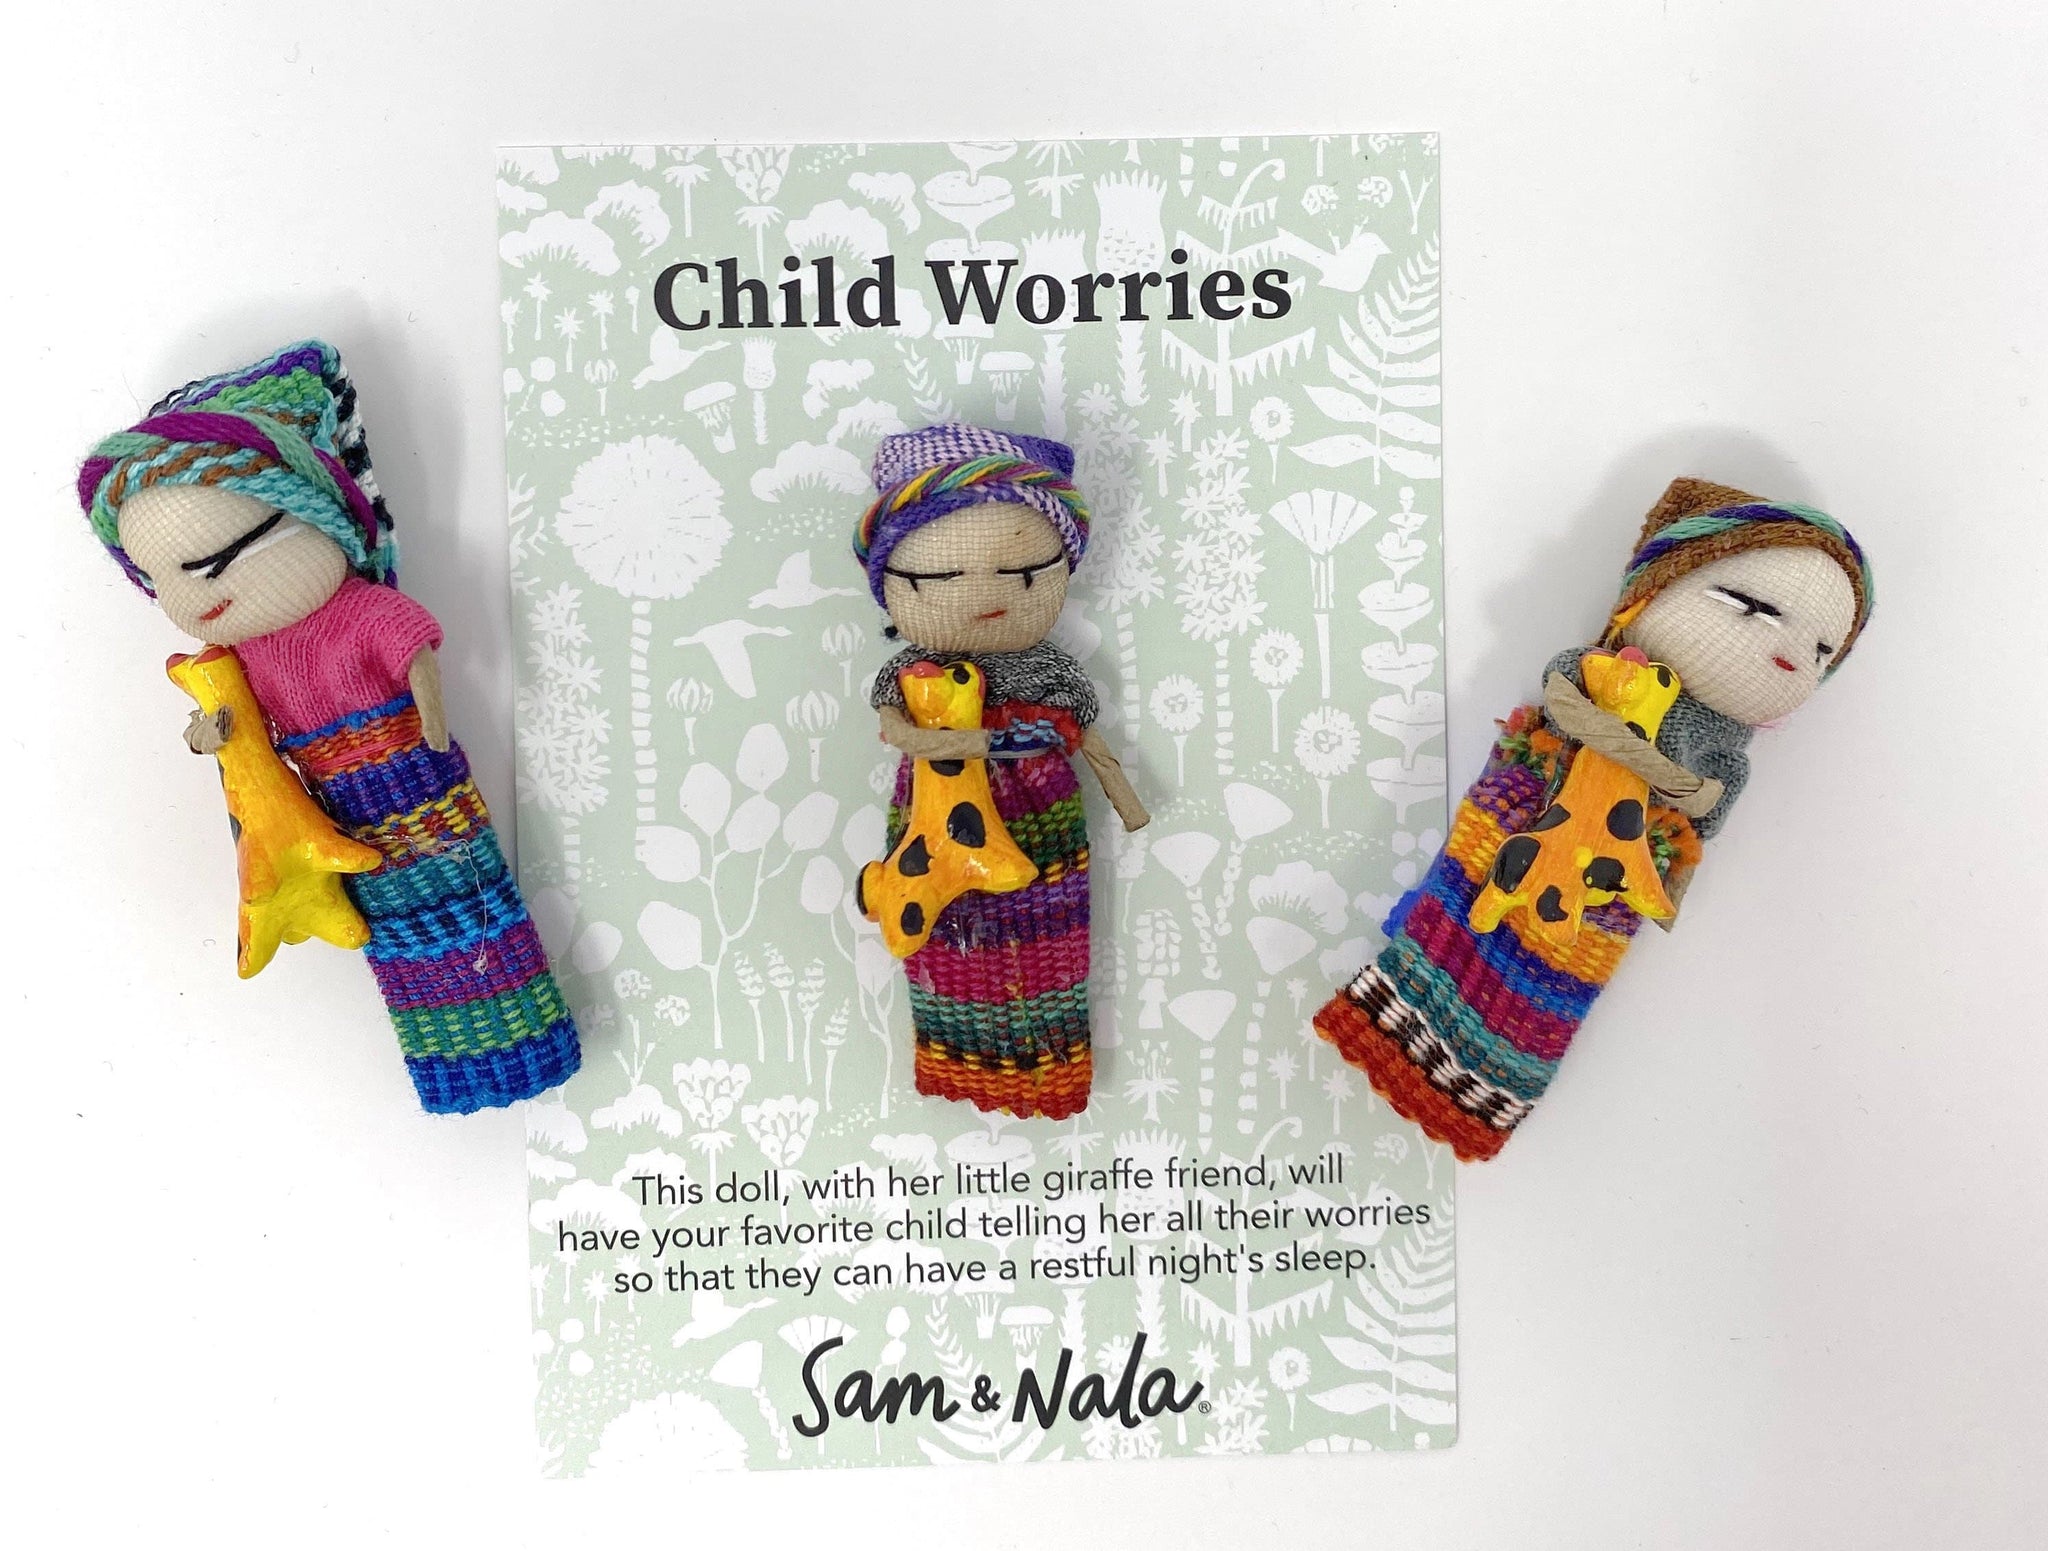 Hand-Woven Worry Dolls - Sleep